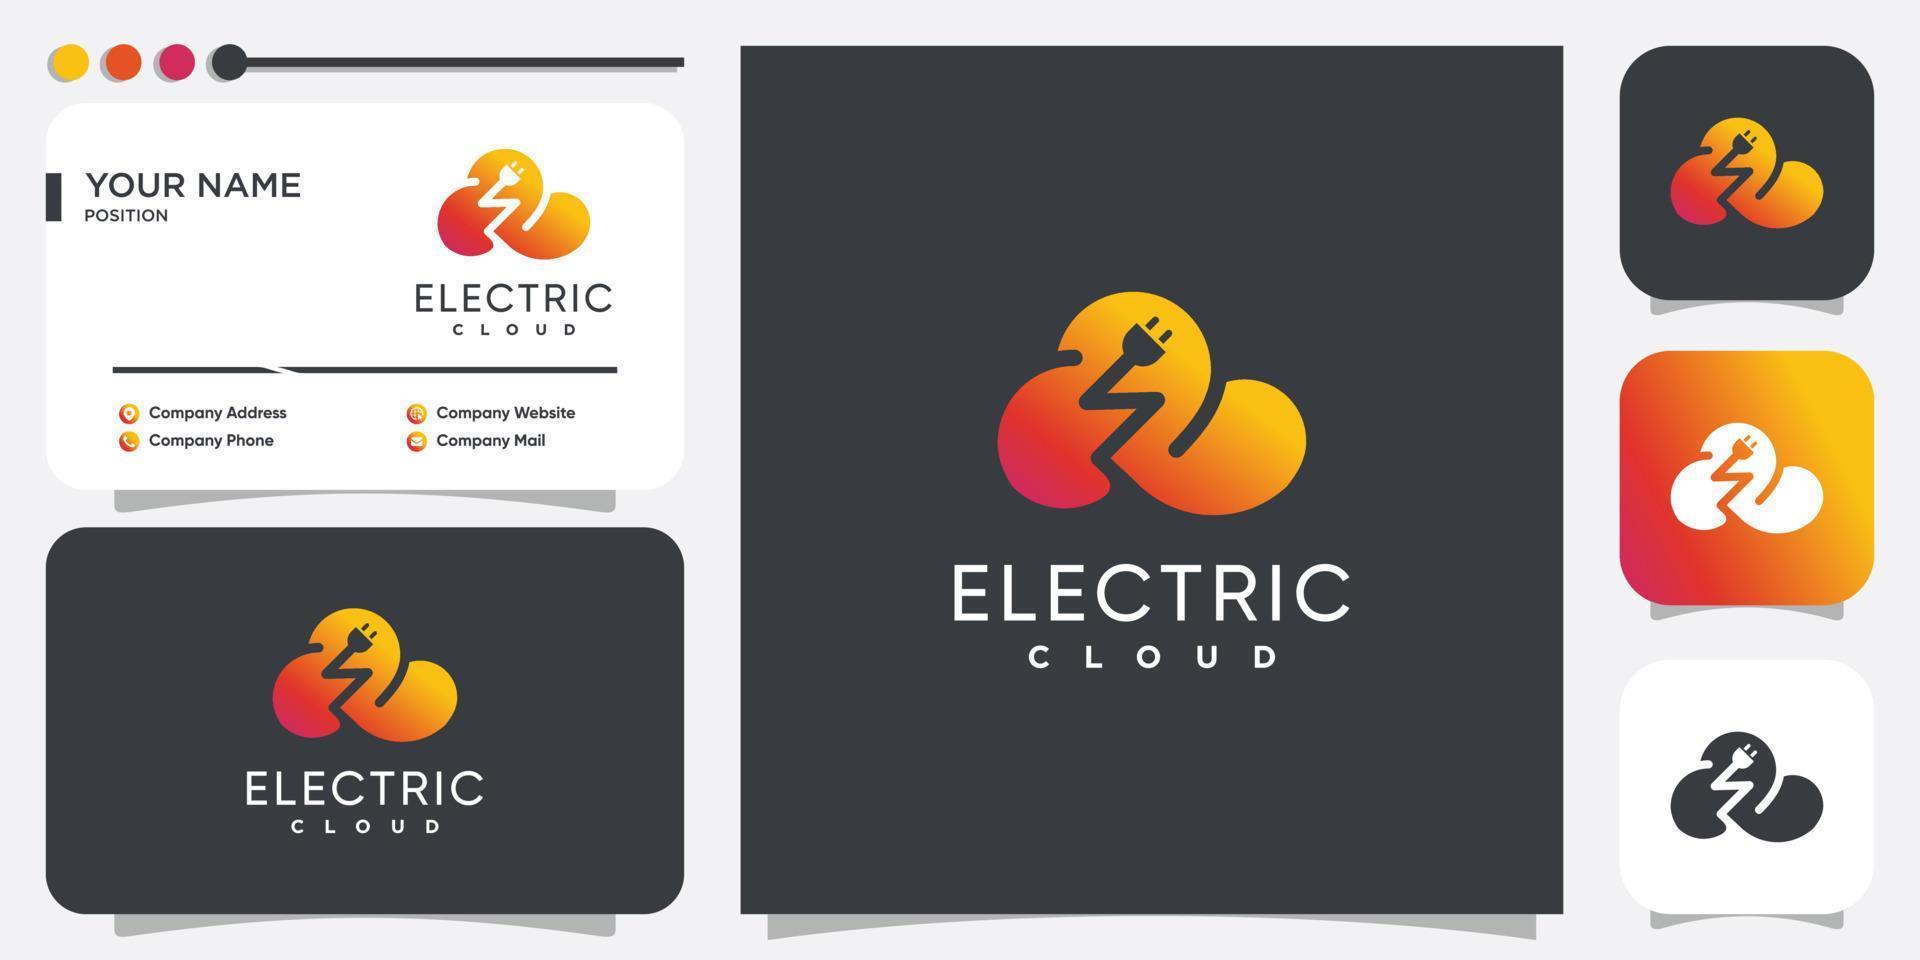 Storm logo with creative electric concept Premium Vector part 1